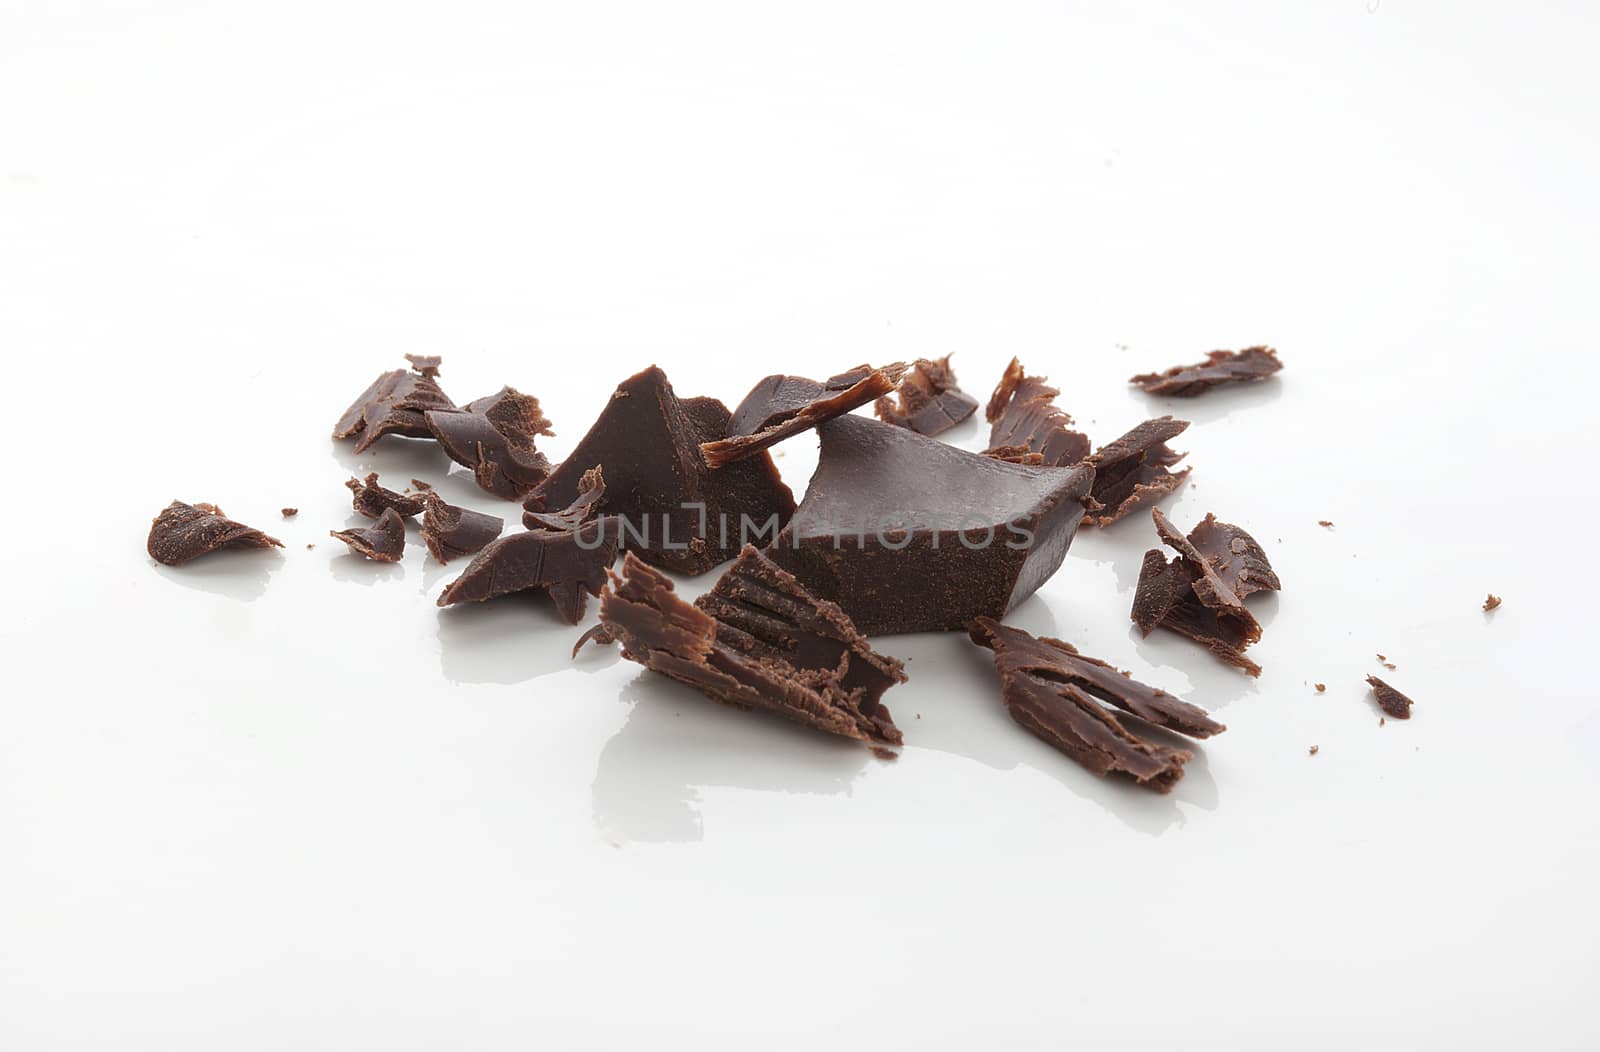 Handfyl of chocolate crumbs on the white background